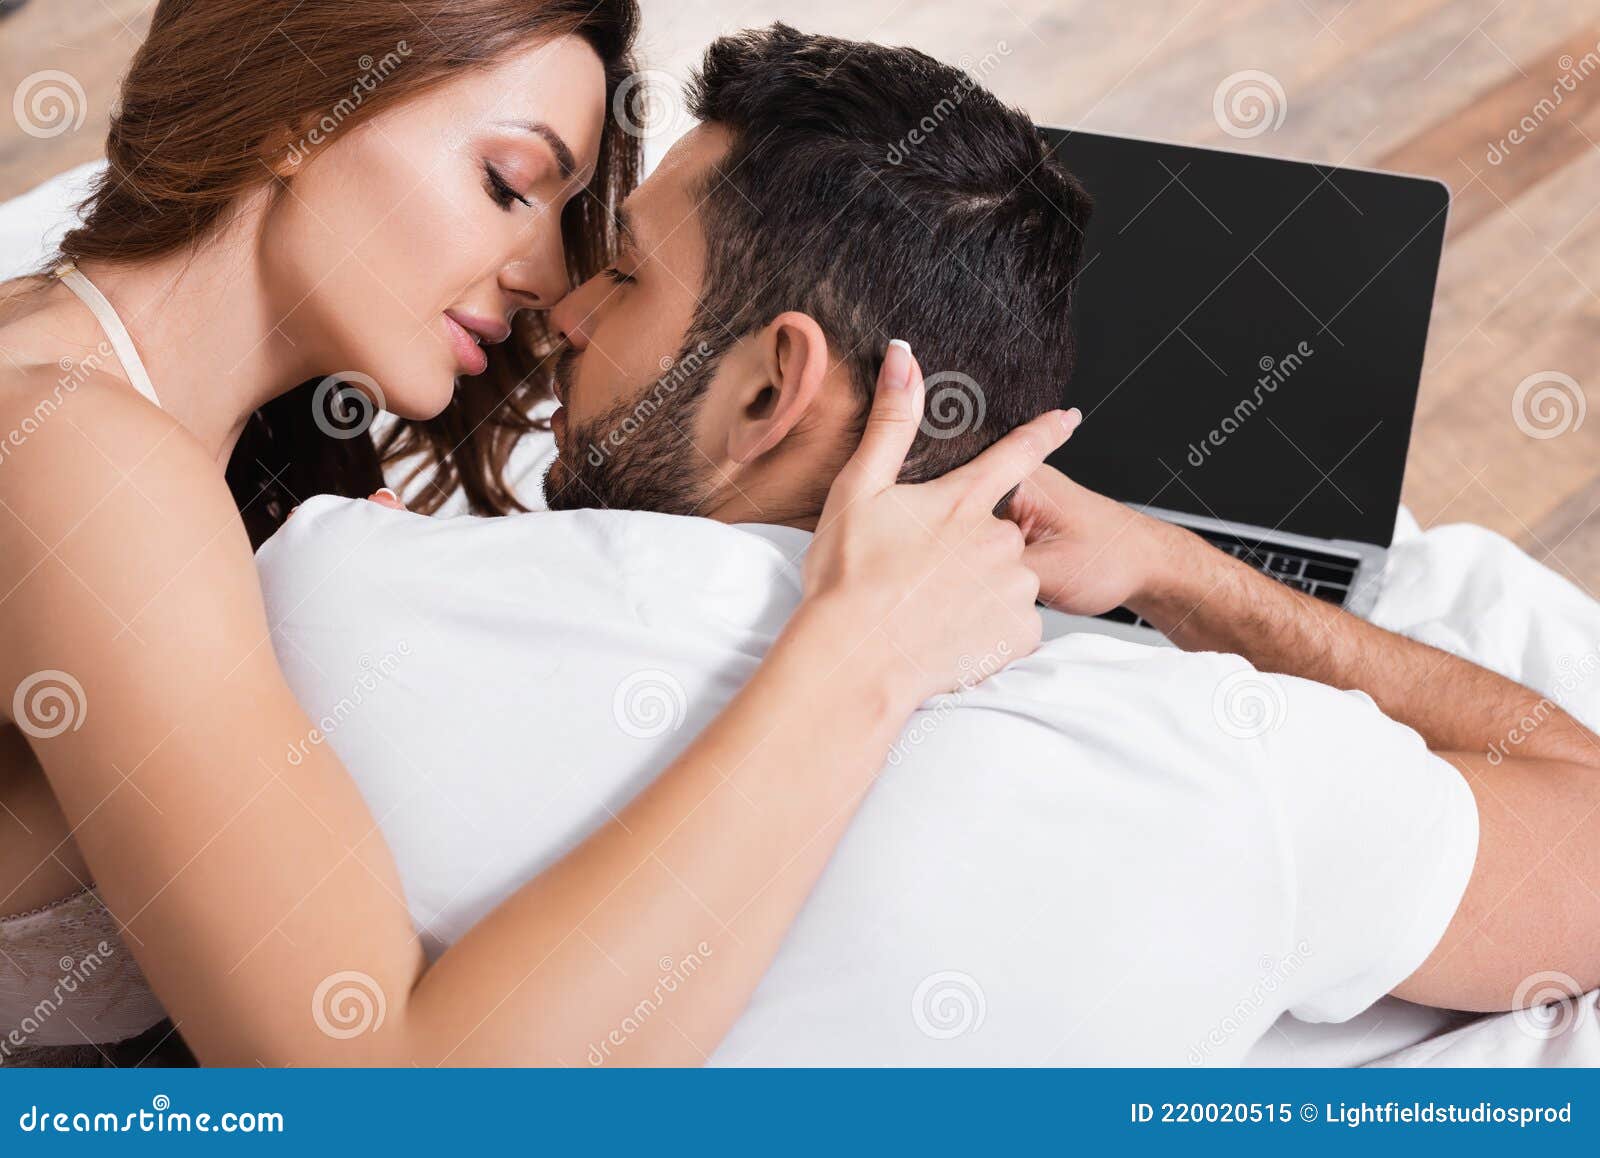 Woman Kissing Boyfriend Near Blurred Stock Image pic